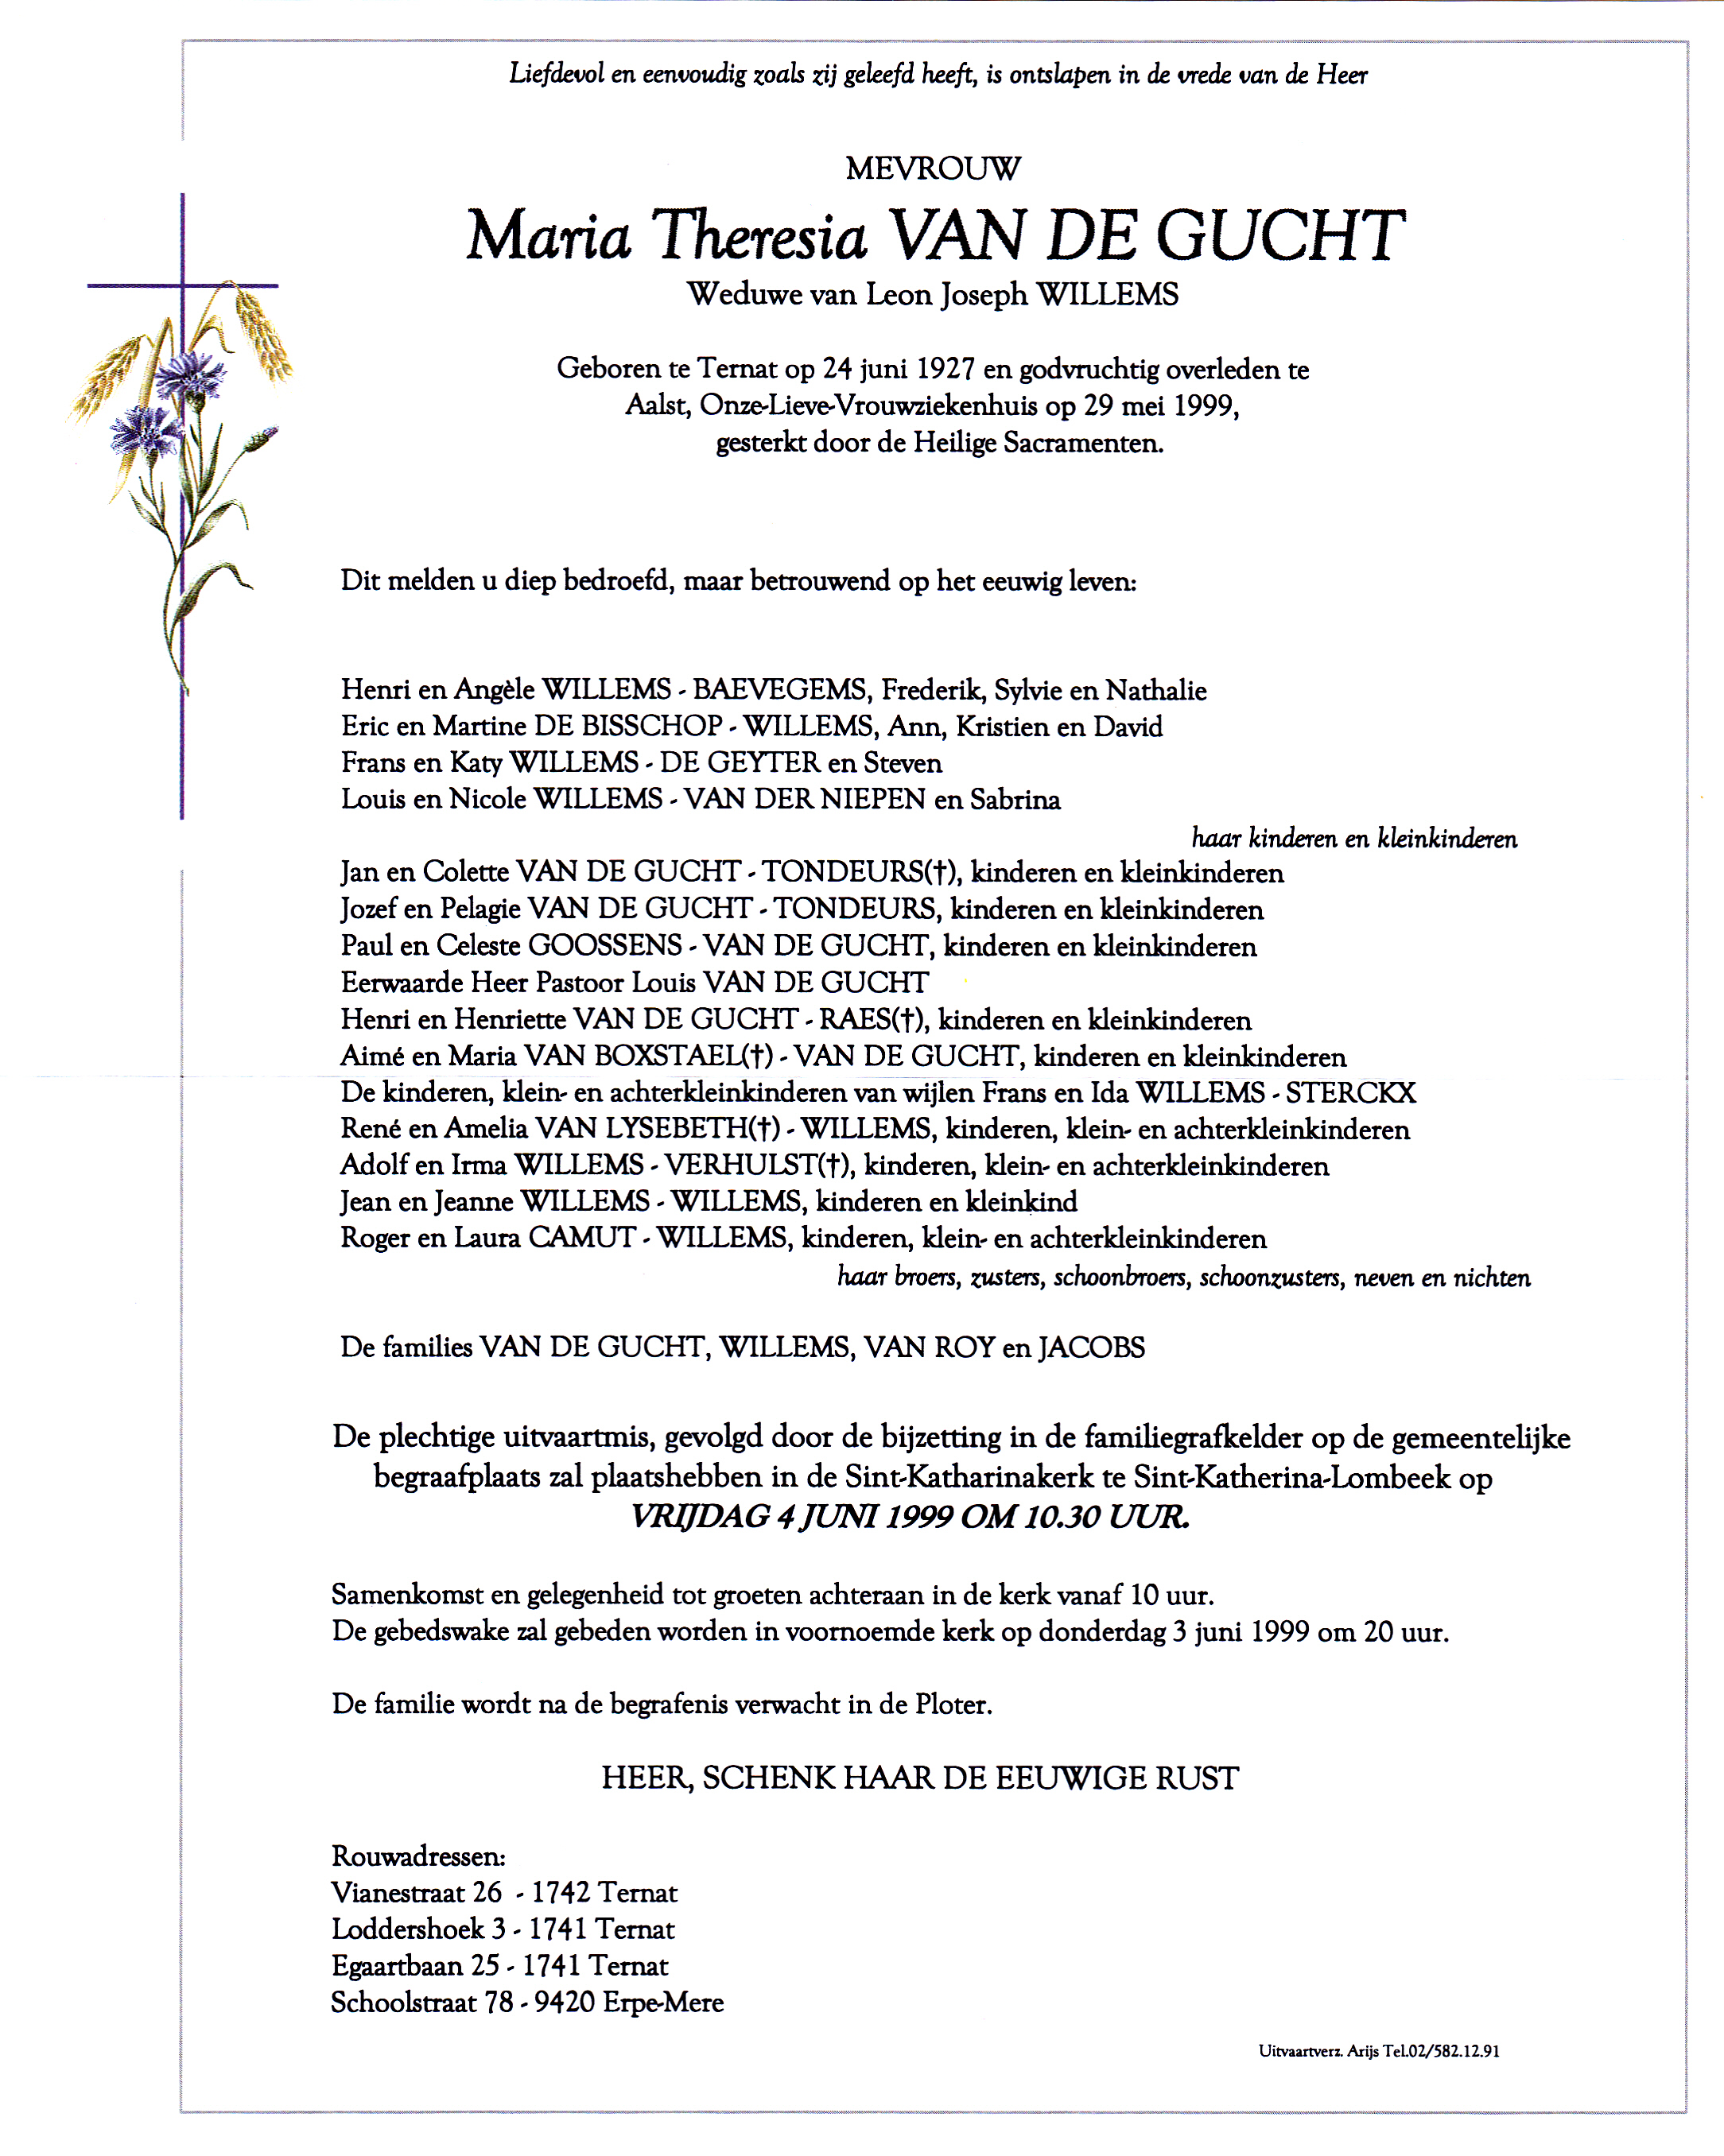 Van de Gucht Maria Theresia  